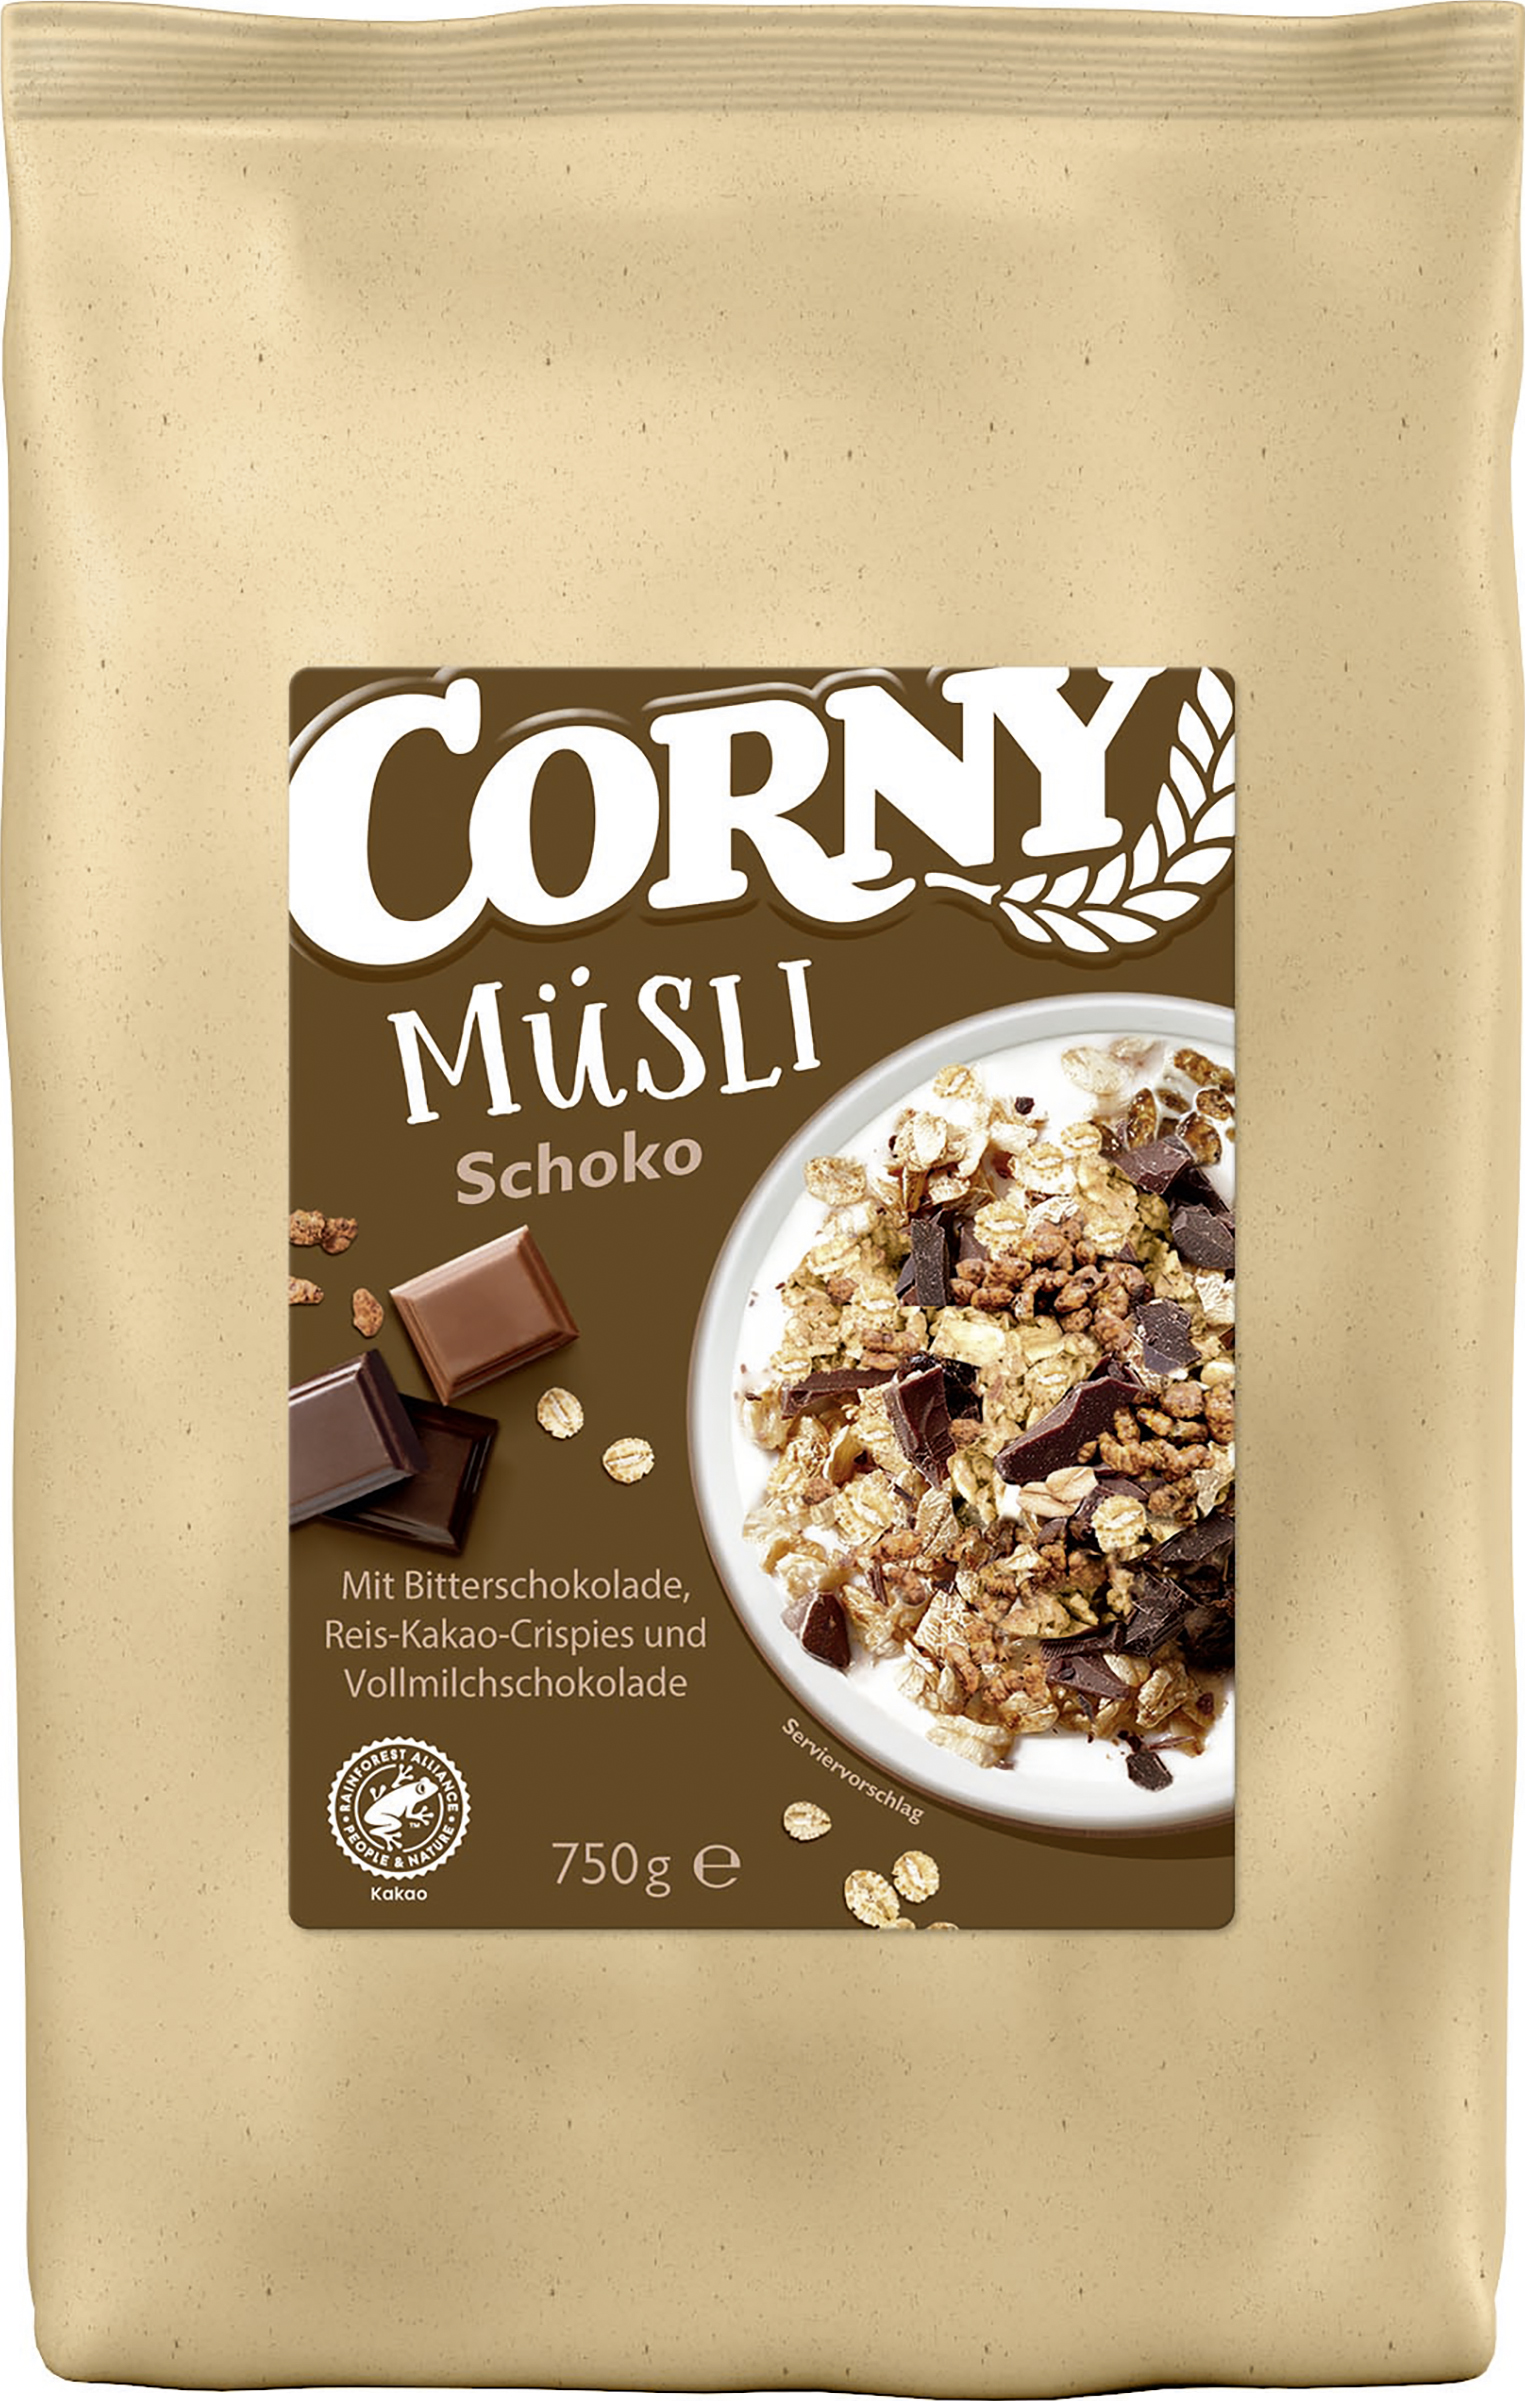 Corny Müsli Schoko 750g Beutel